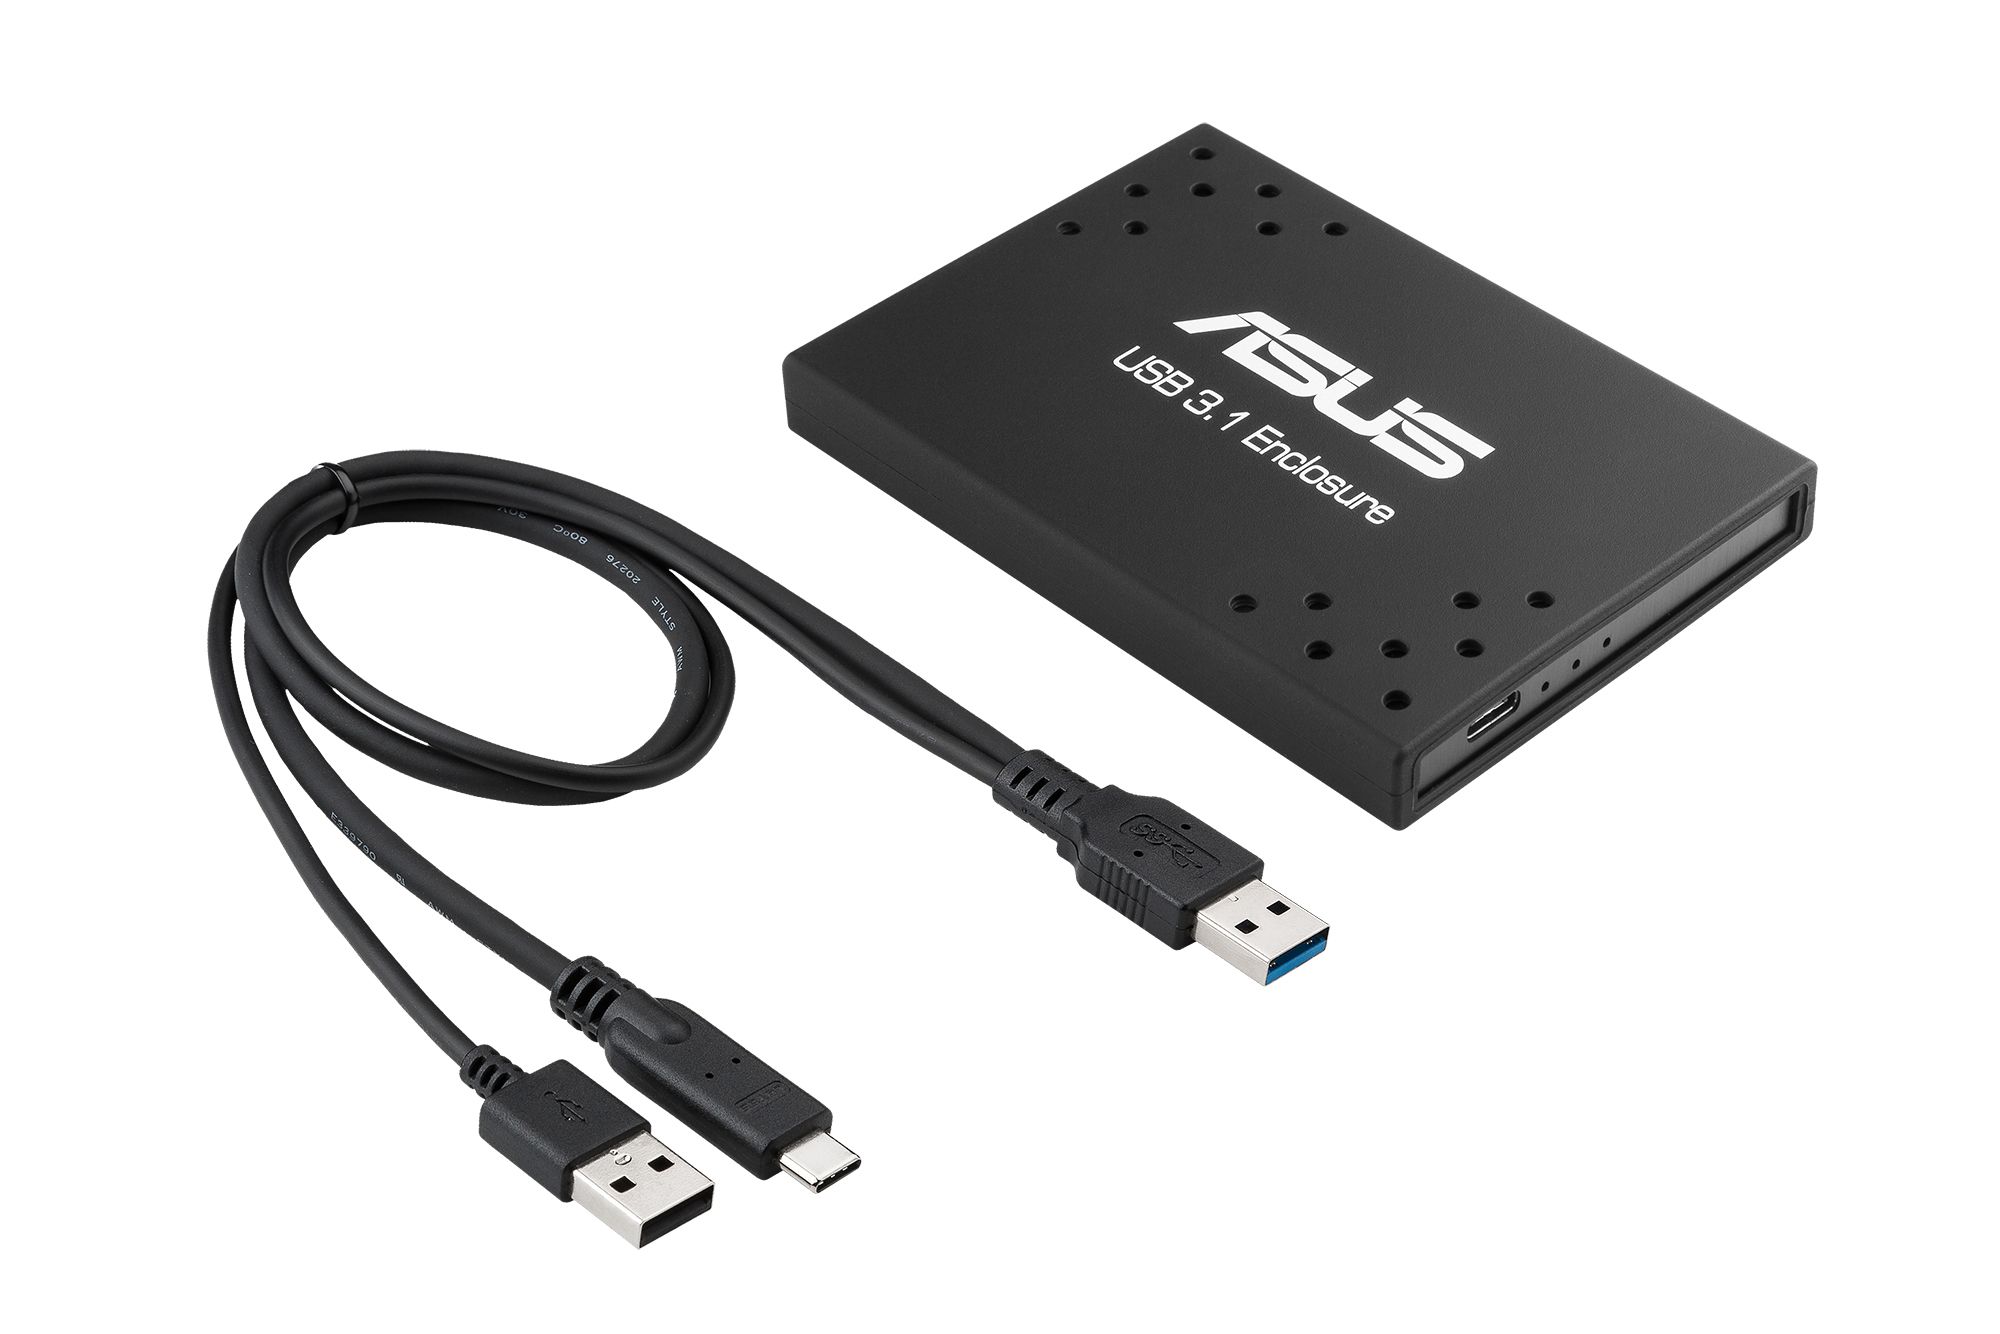 Asus USB 3.1 Enclosure